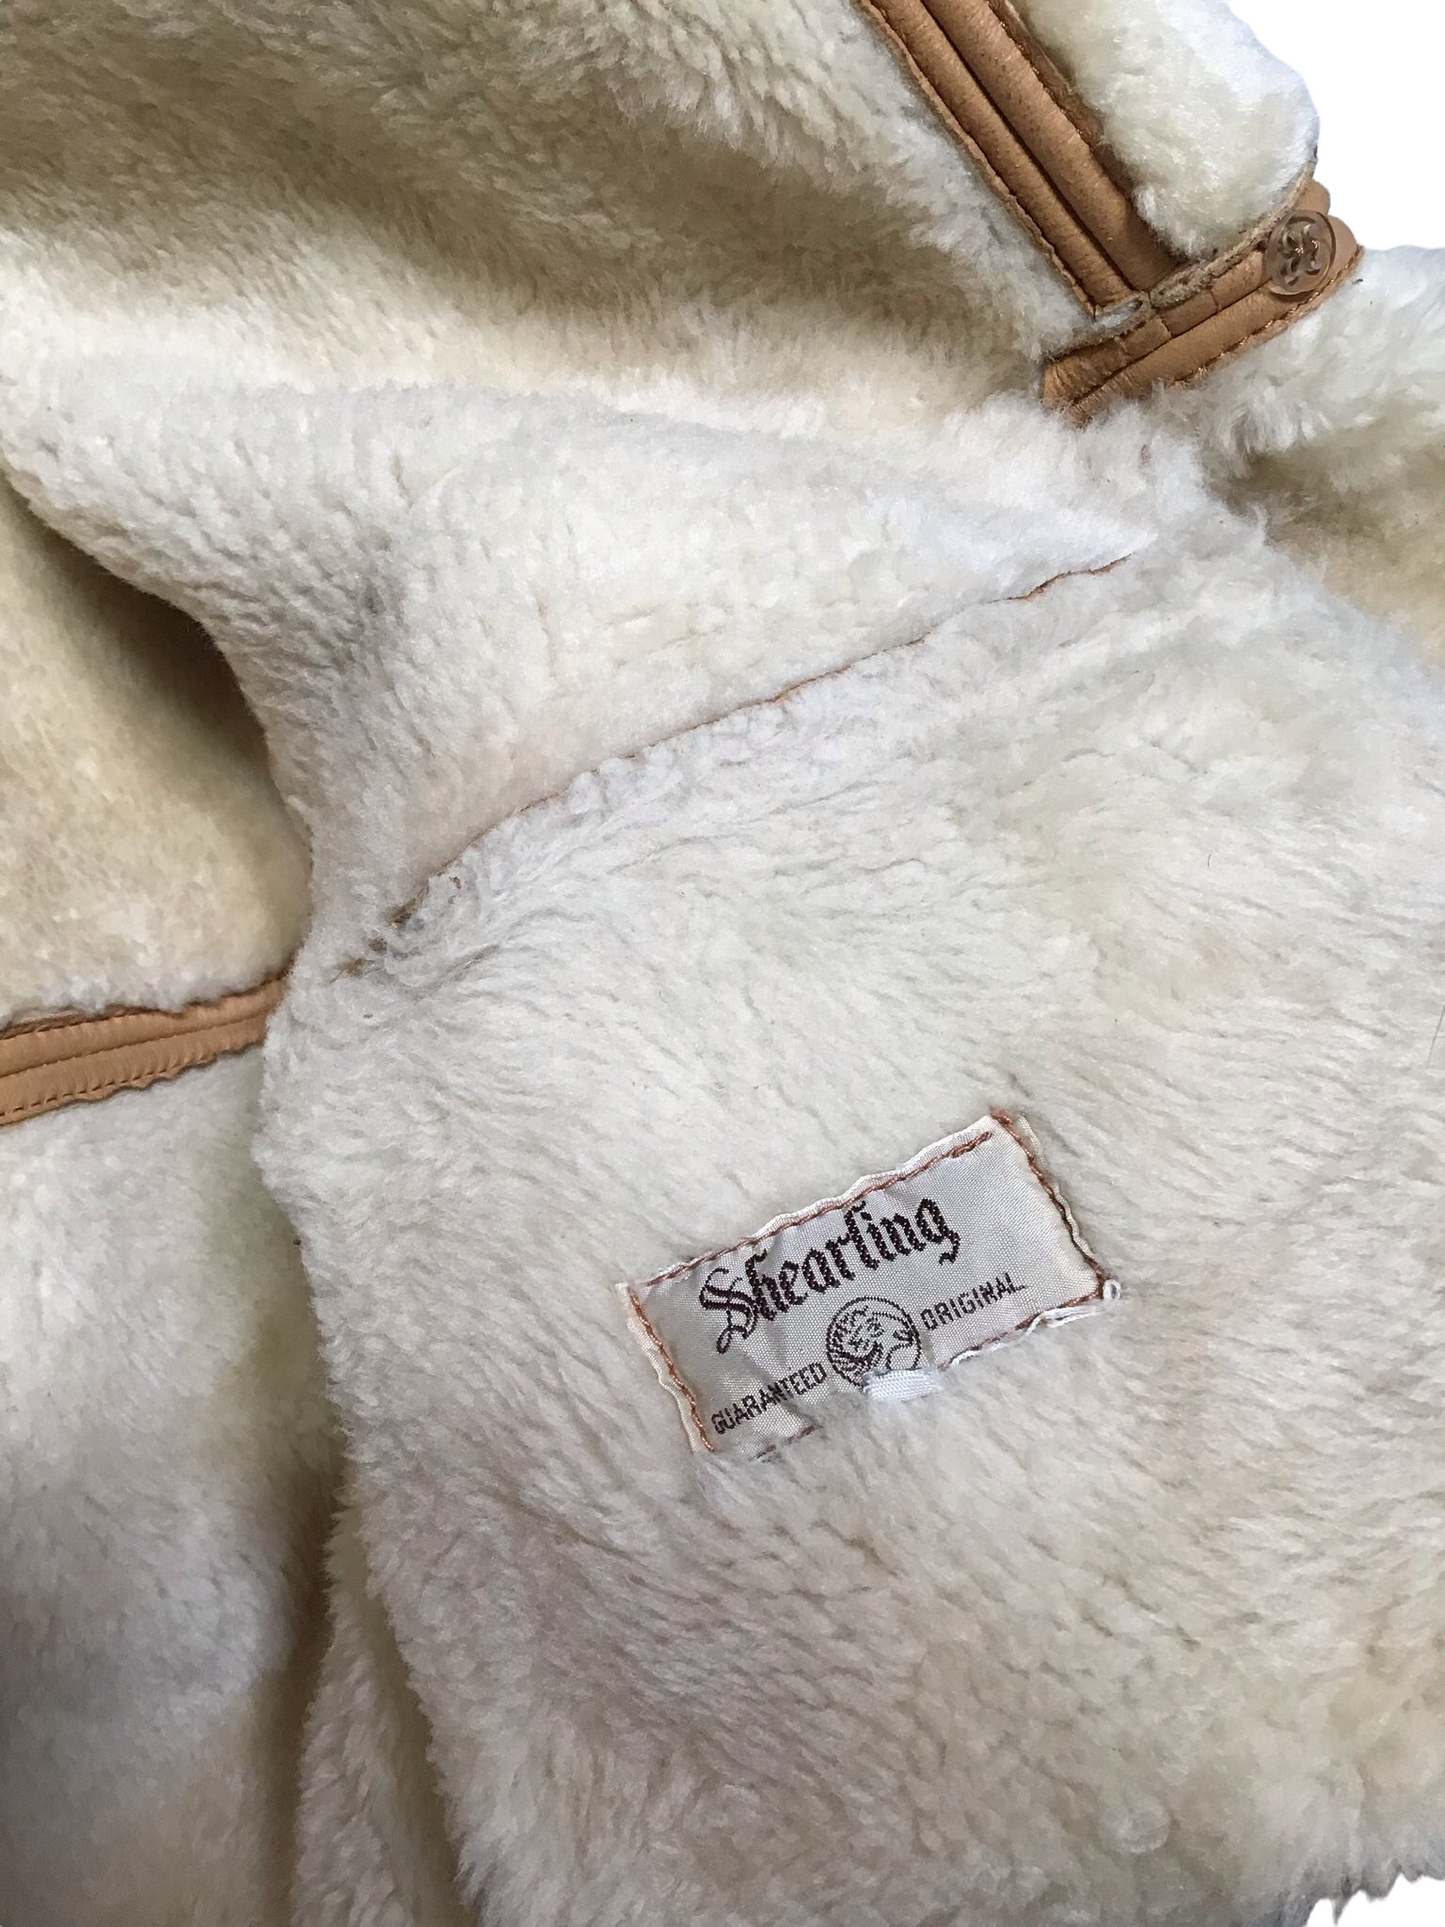 Shearling Flying Jacket (Size XL)